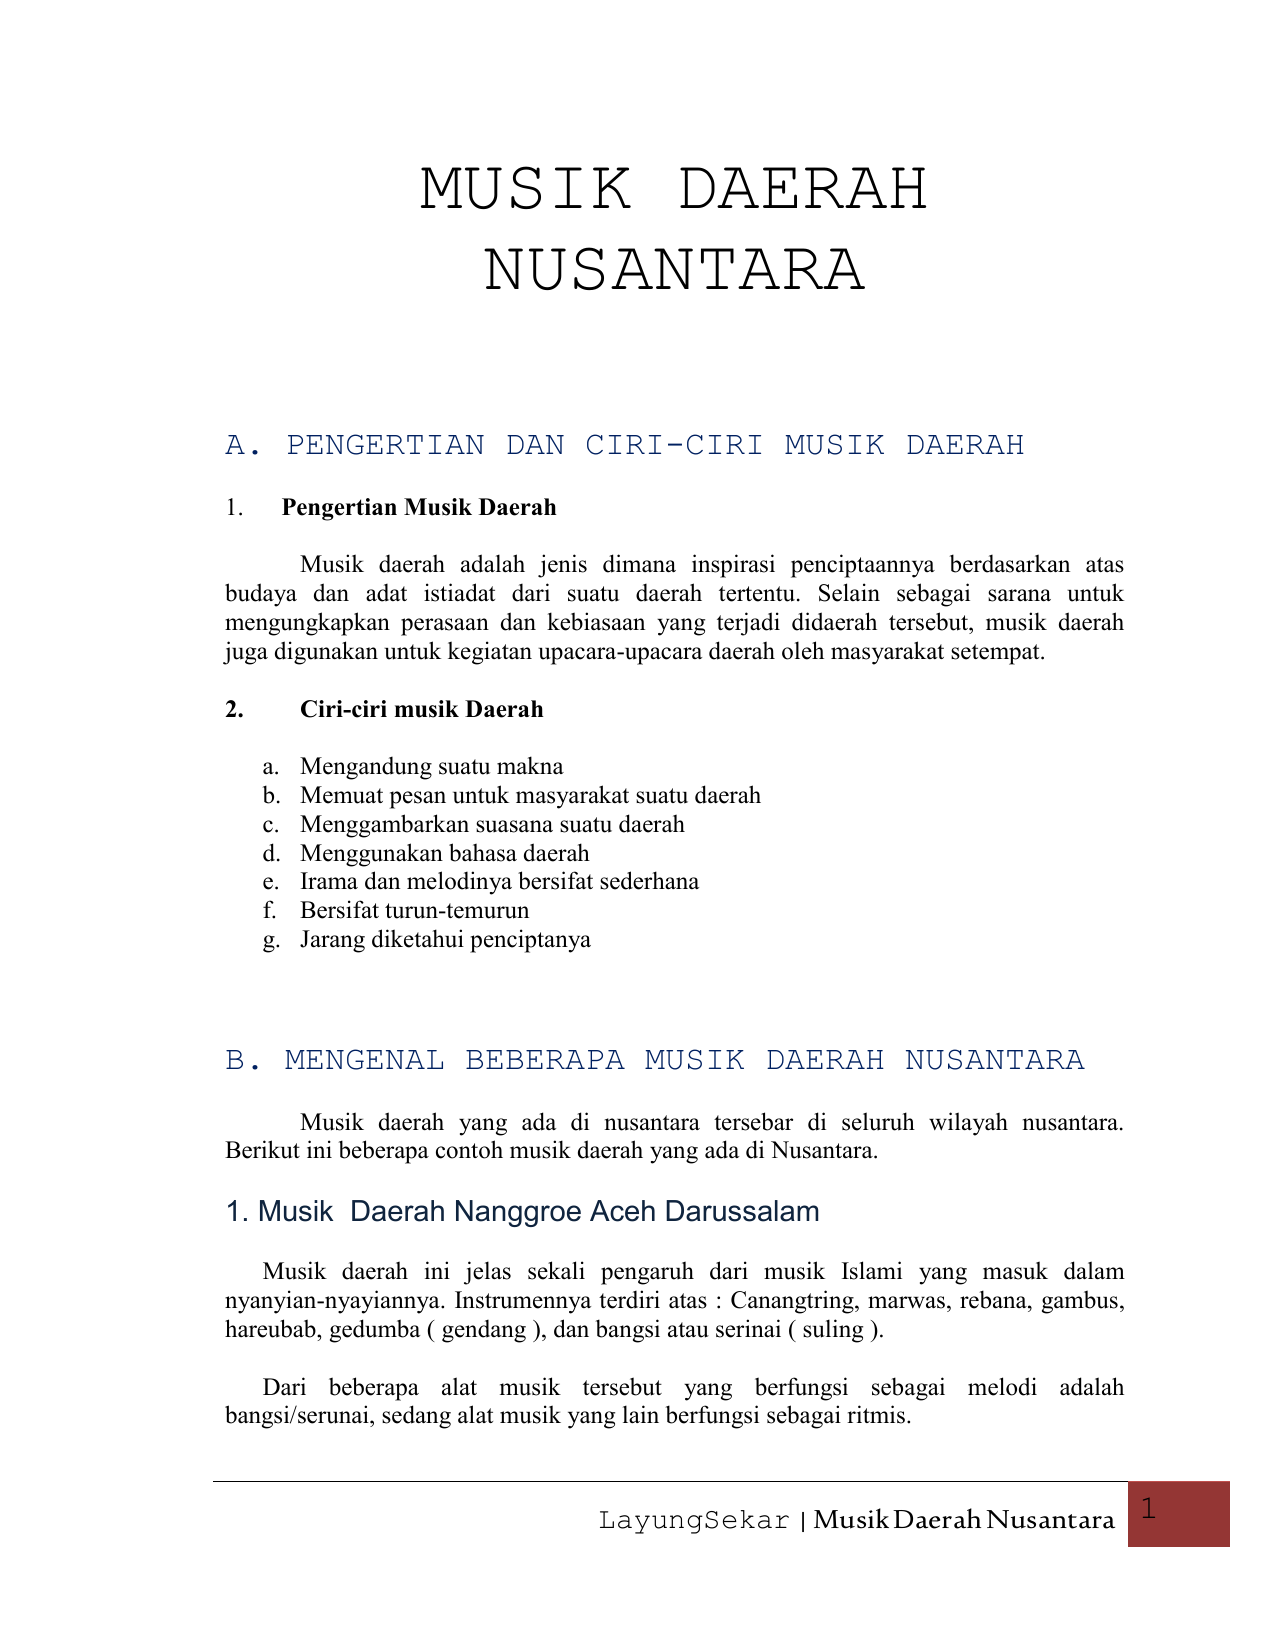 Musik Daerah Nusantara